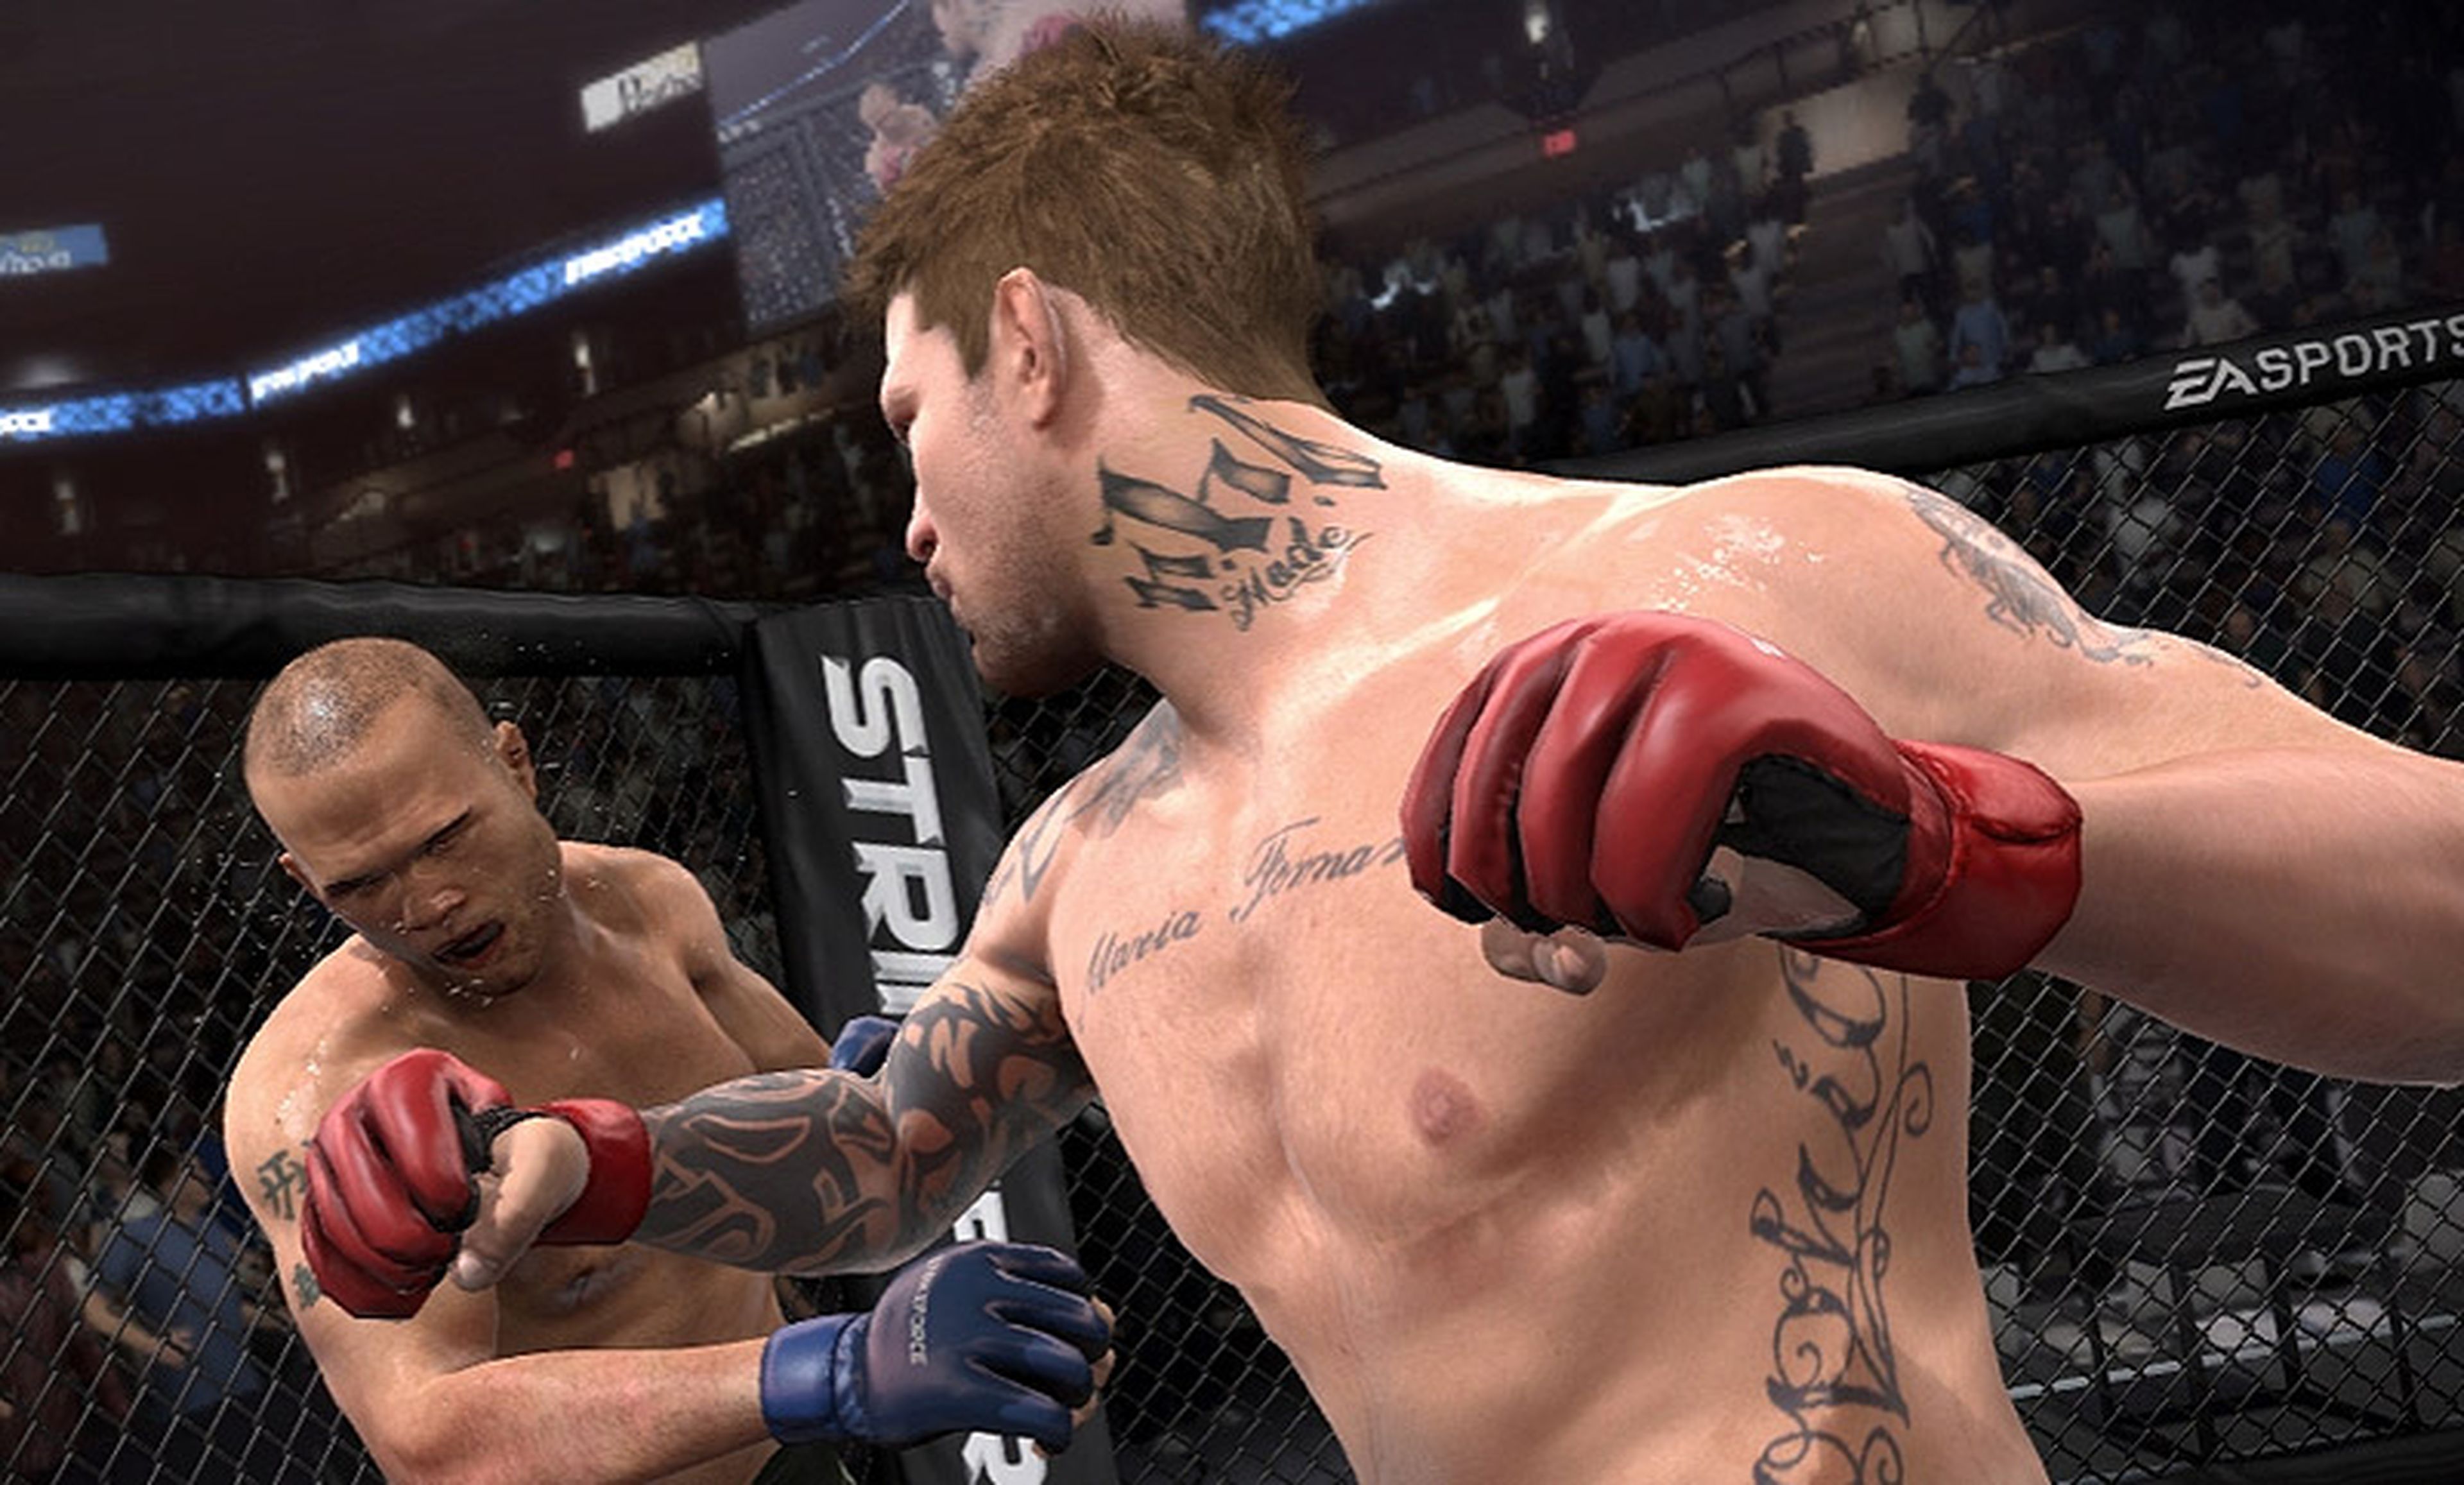 Demo de EA Sports MMA este mes